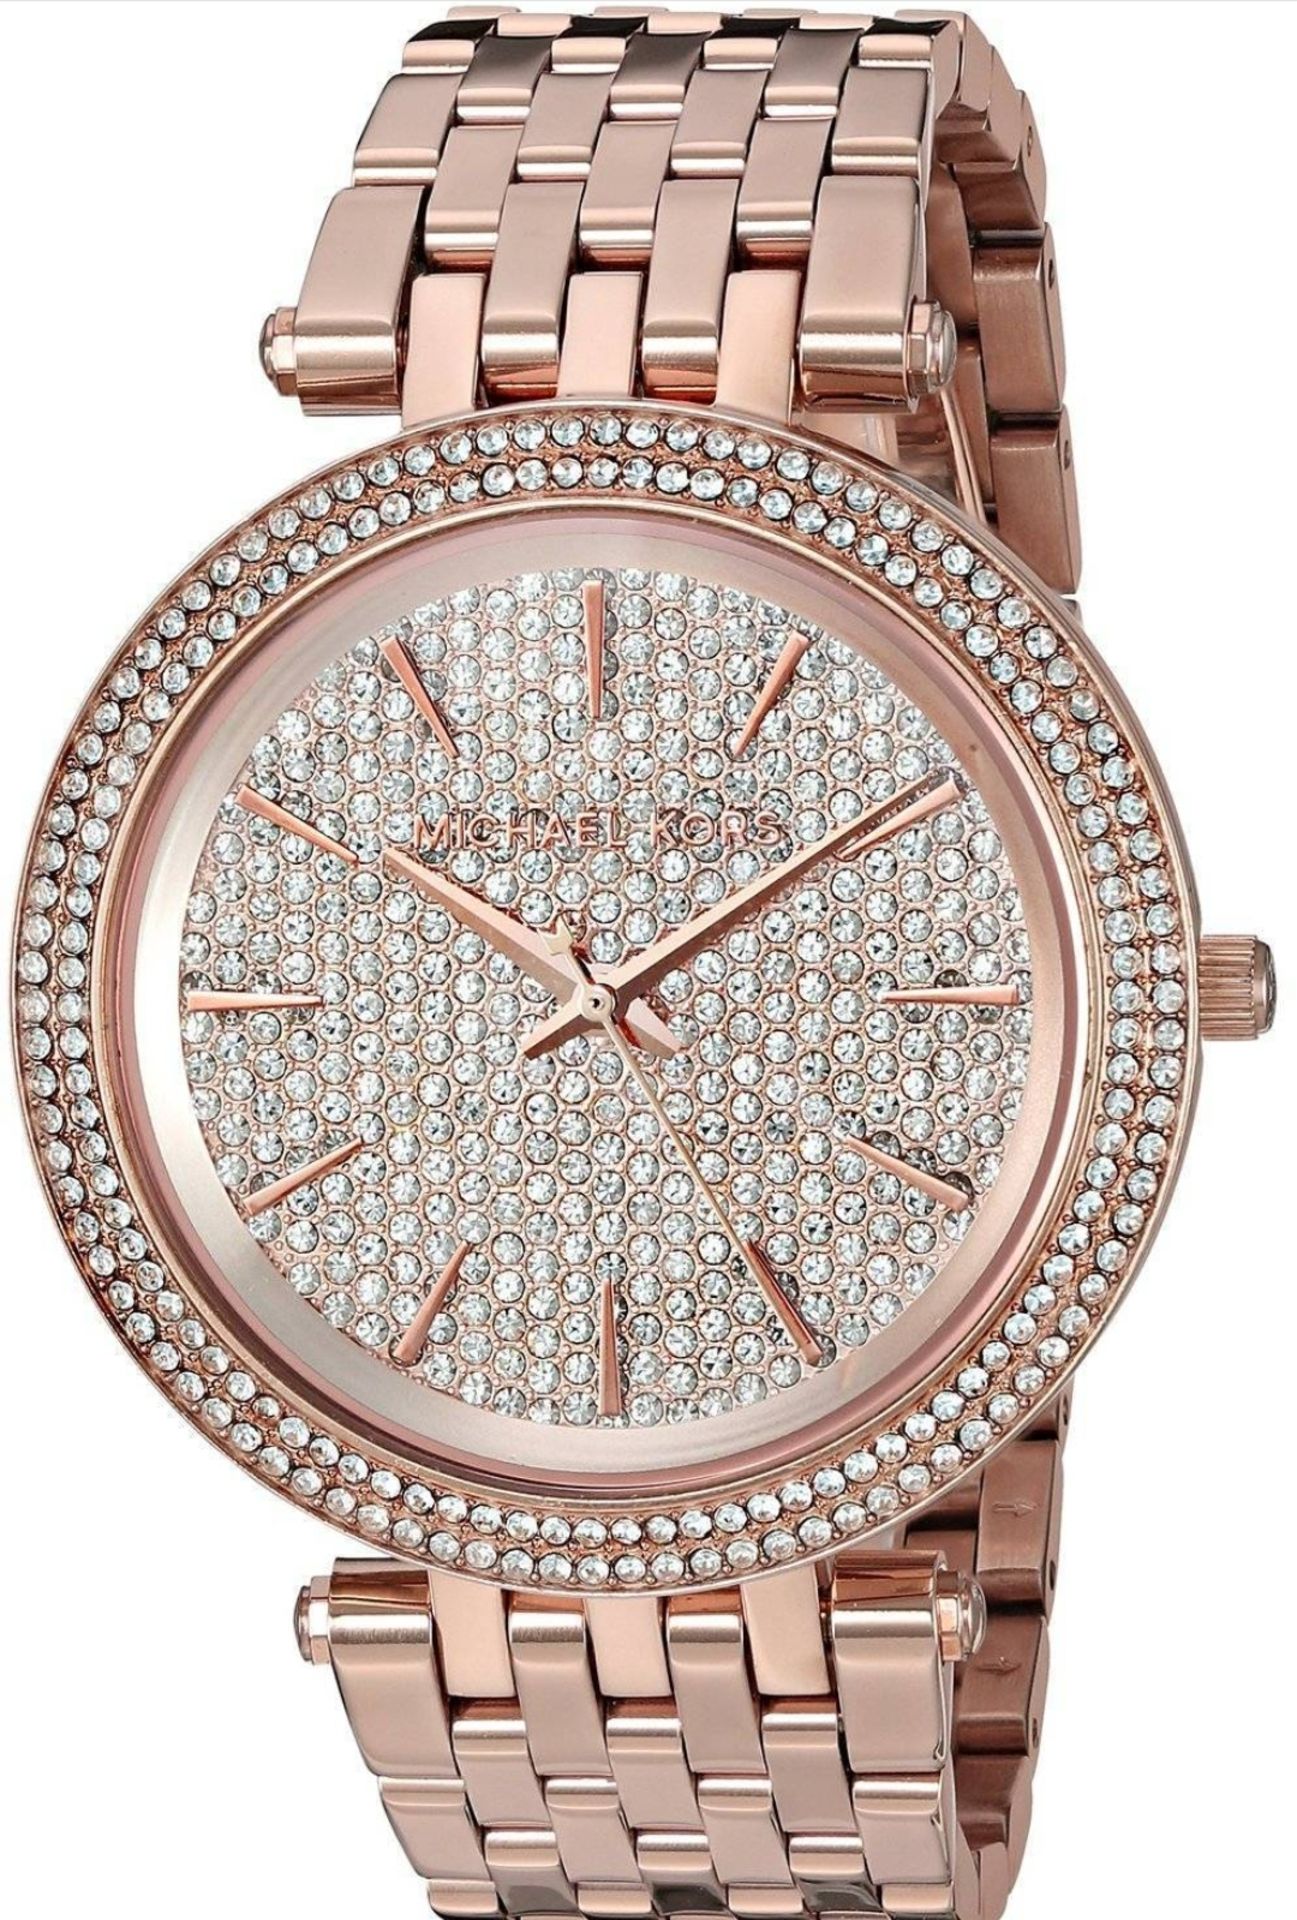 Michael Kors MK3439 Ladies Rose Gold Darci Quartz Watch - Image 3 of 5